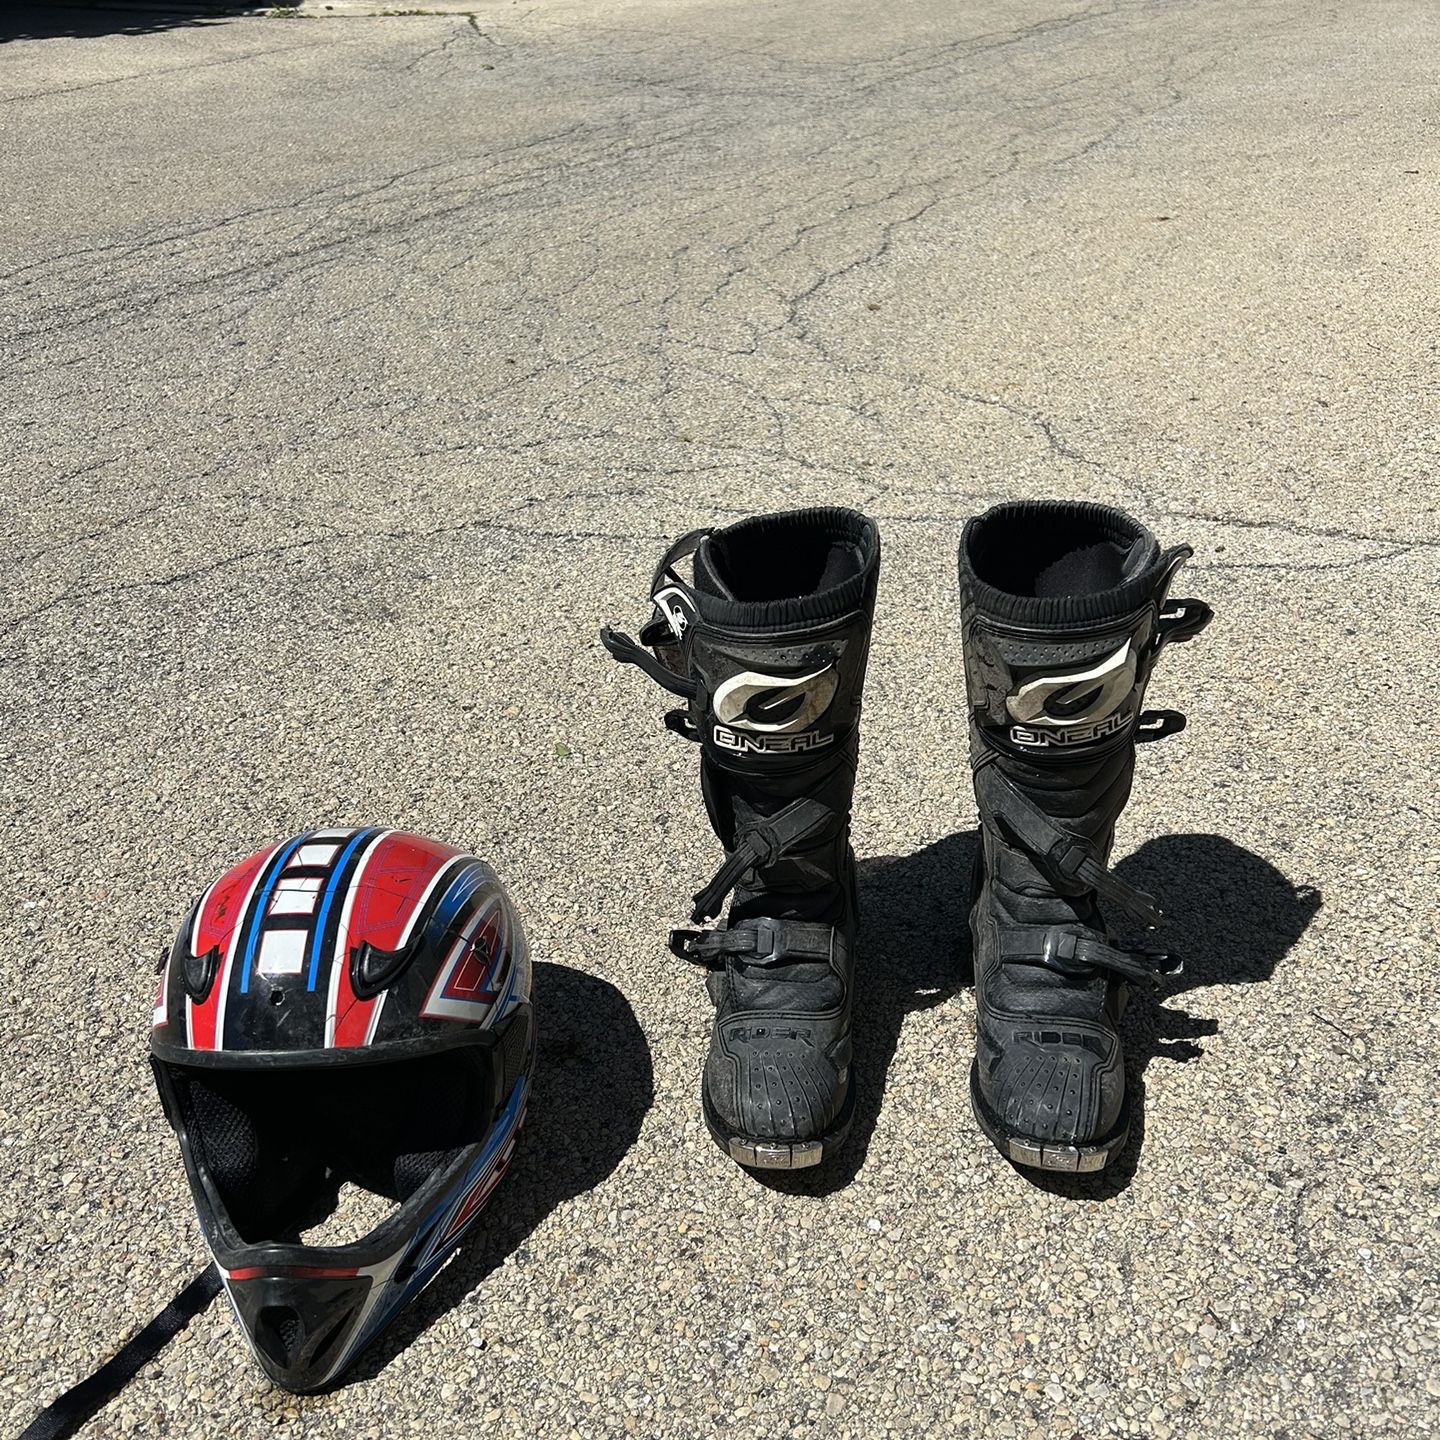 Dirtbike Boots And Helmet